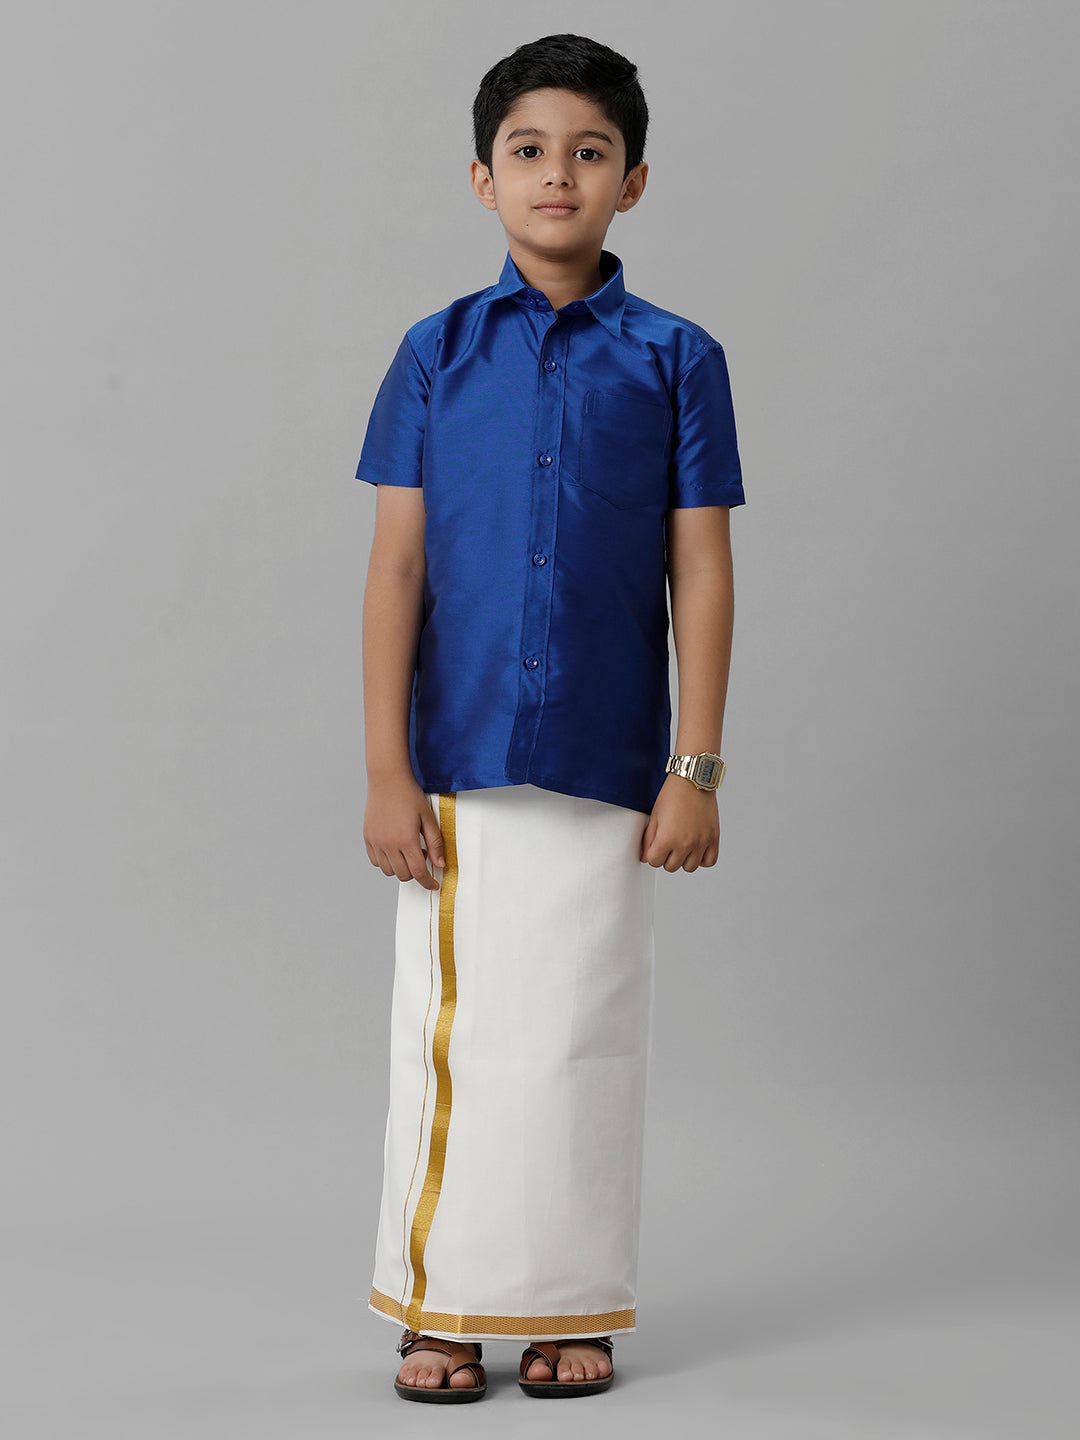 Boys Silk Cotton Light Blue Half Sleeves Shirt with Adjustable Cream Dhoti Combo K5